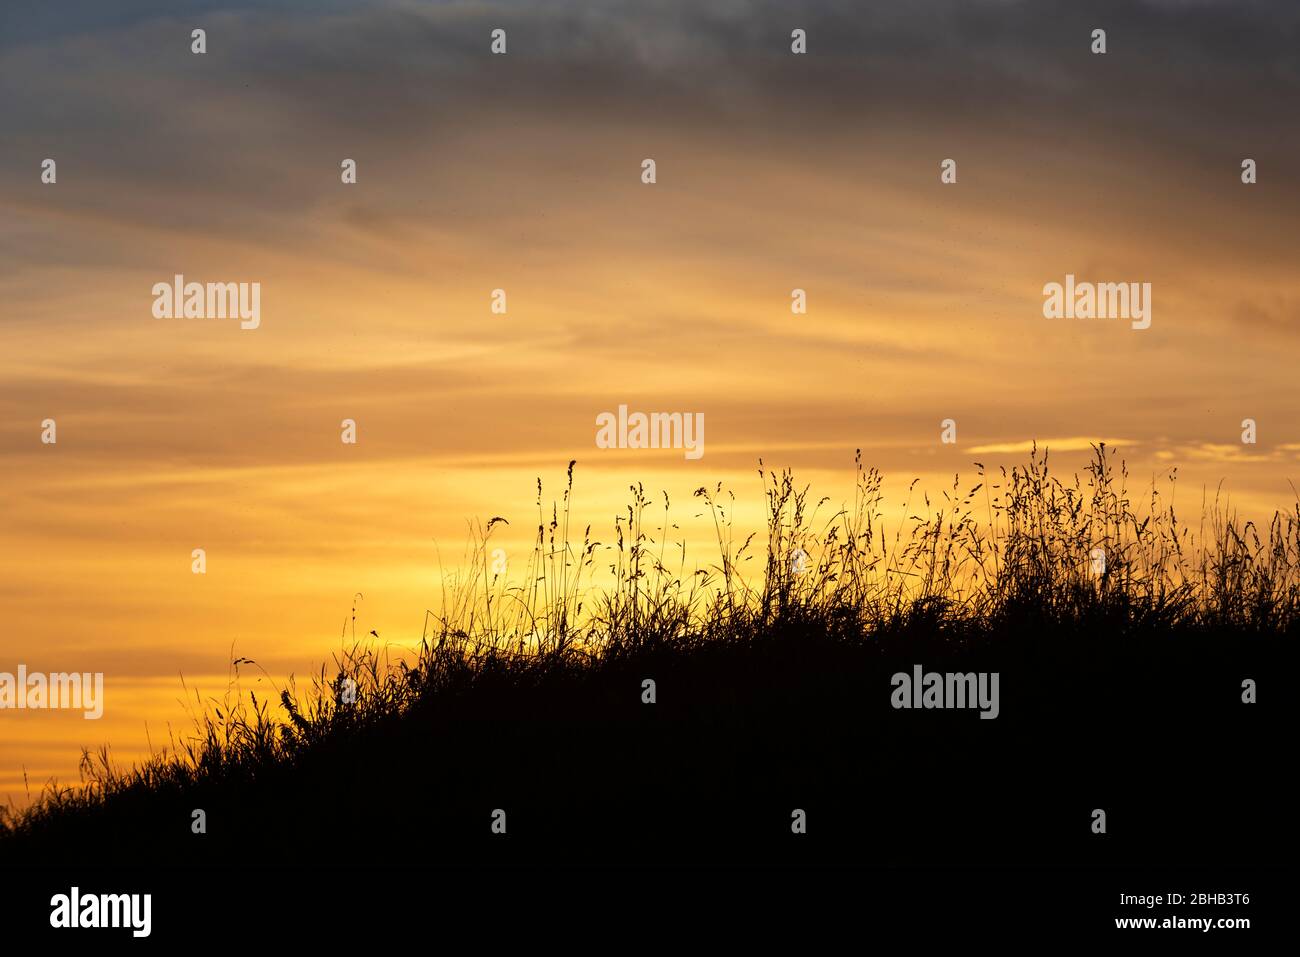 Grass silhouette before evening sky. Stock Photo